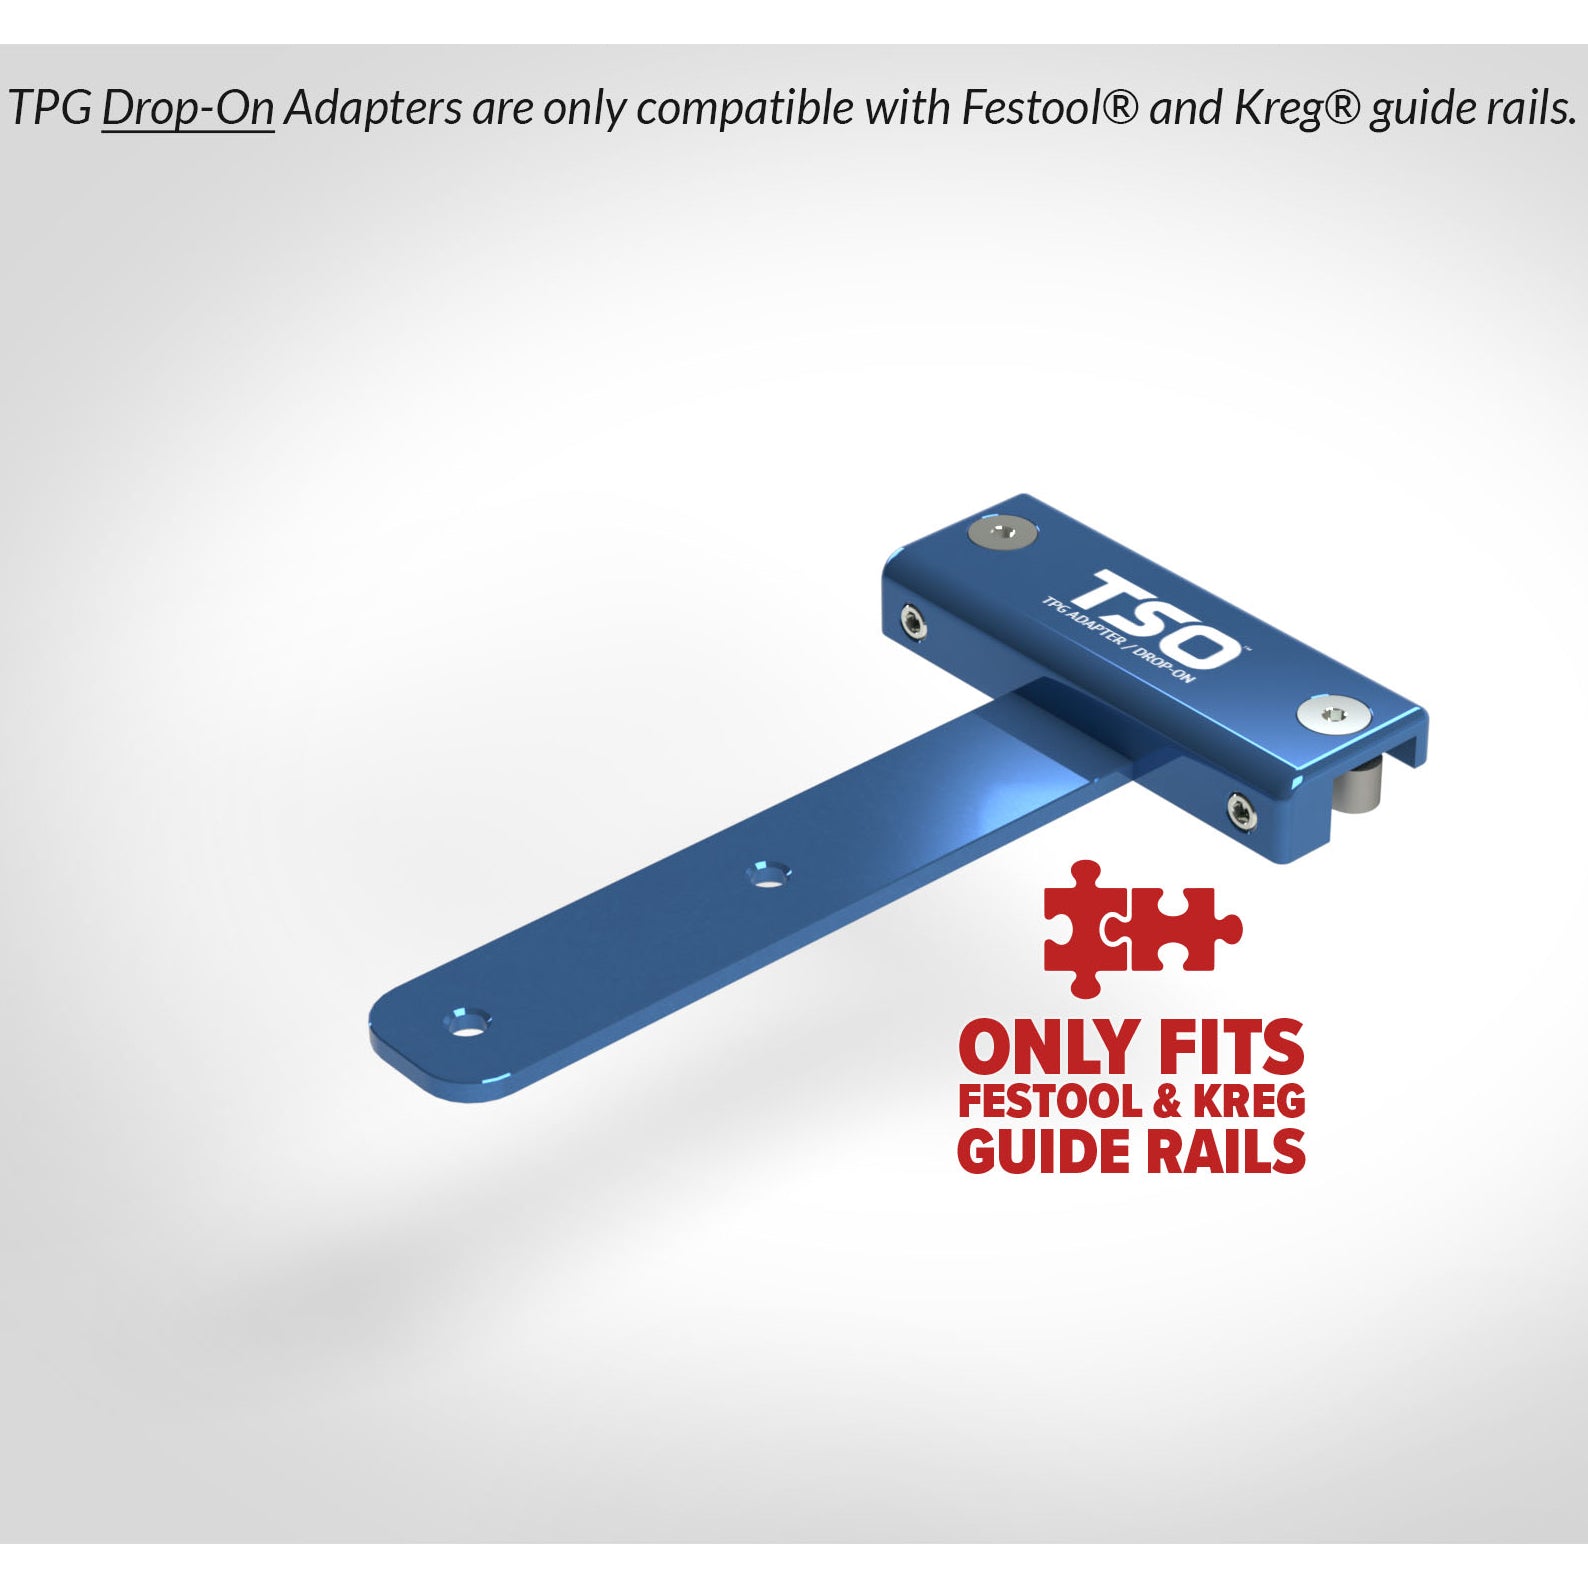 Assembled TPG Drop-On Adapter for Festool/Kreg Guide Rails, showing keystone torpedo nut, body, arm, set screws and bolts.